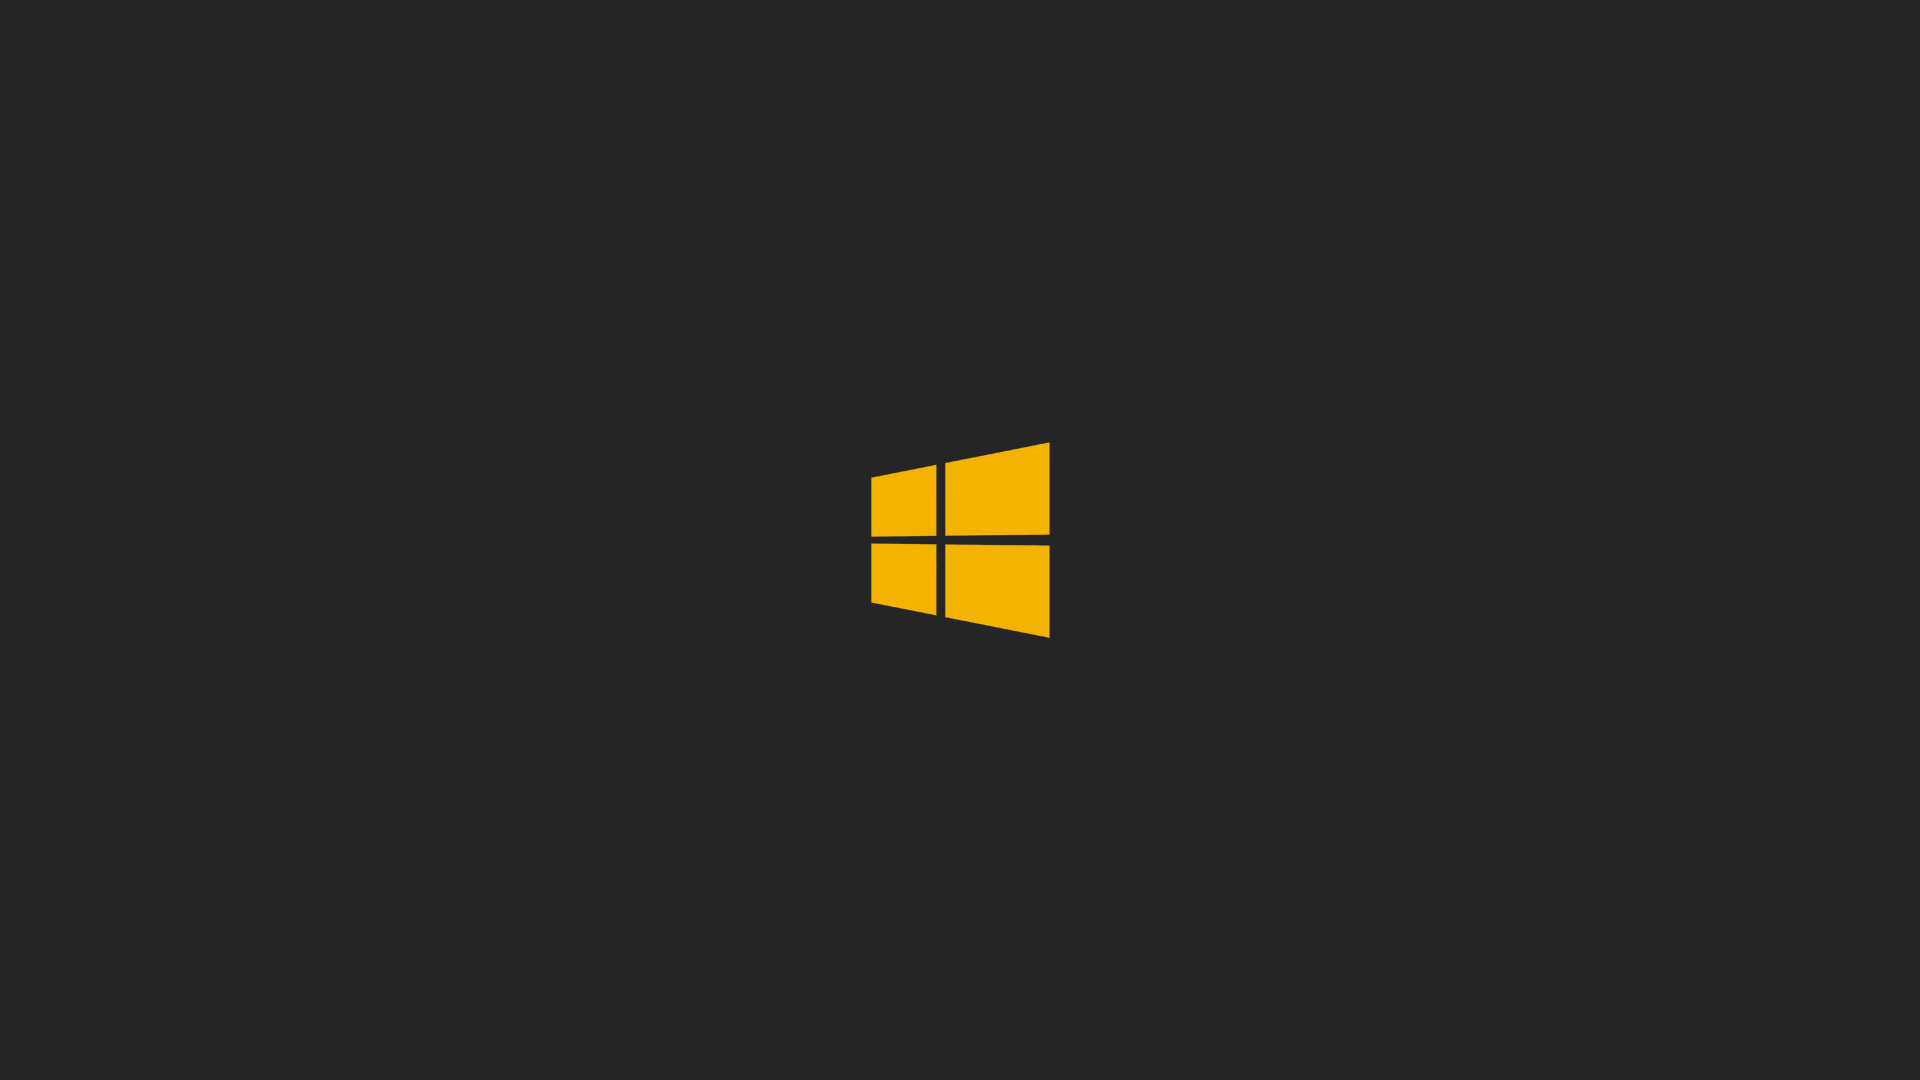 Windows 8 Yellow Logo And Black Background Des #11939 Wallpaper ...